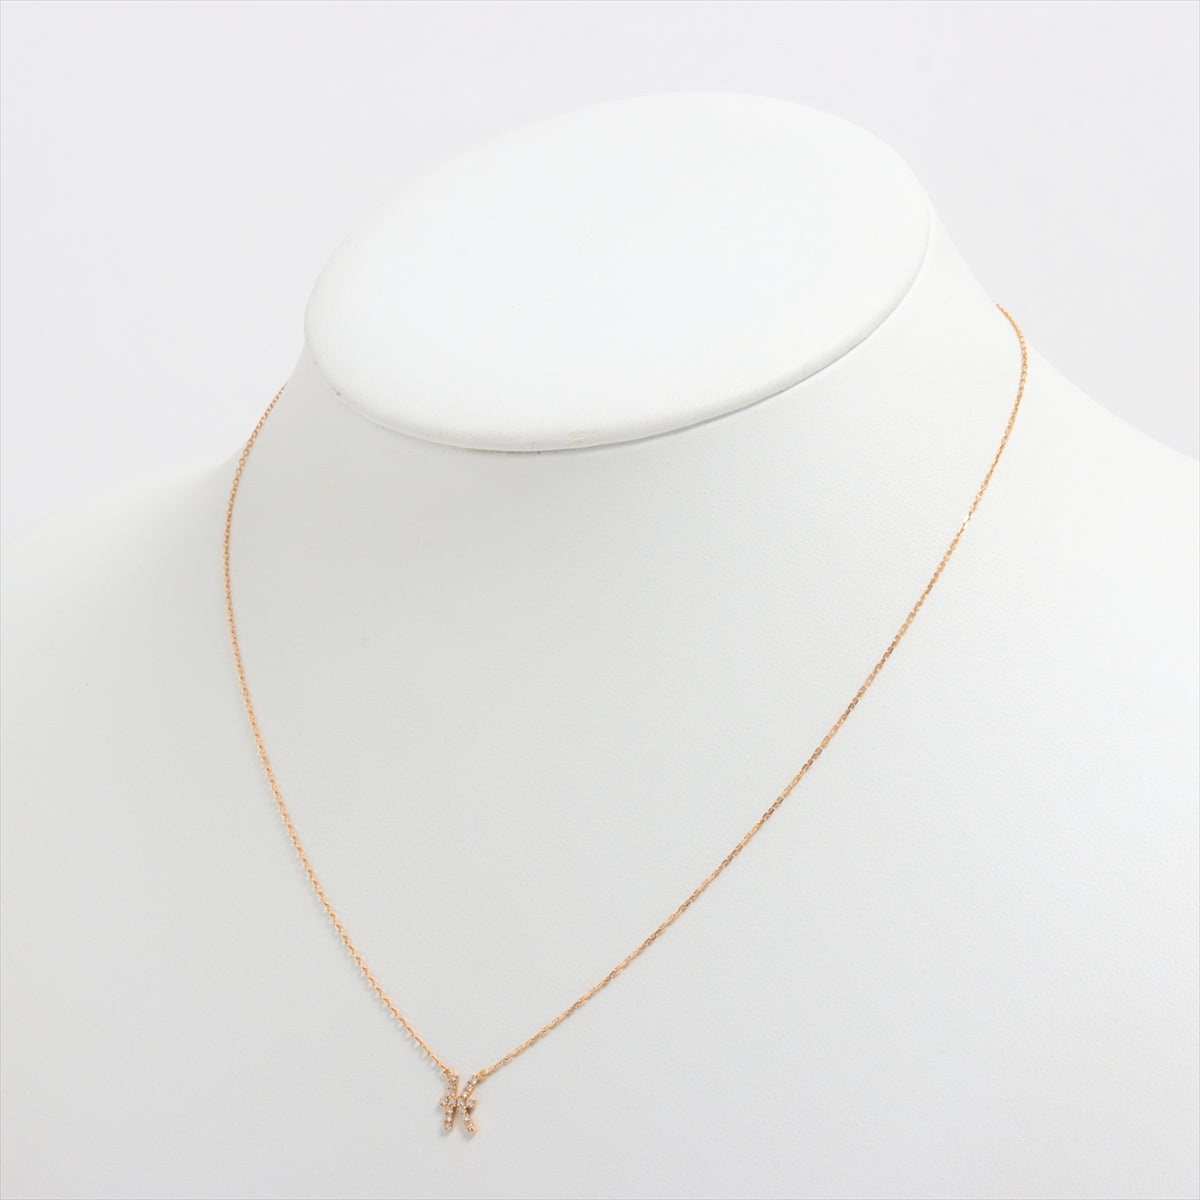 Archer Initial Diamond Necklace K18 (YG) 1.3g 0.06 FULL